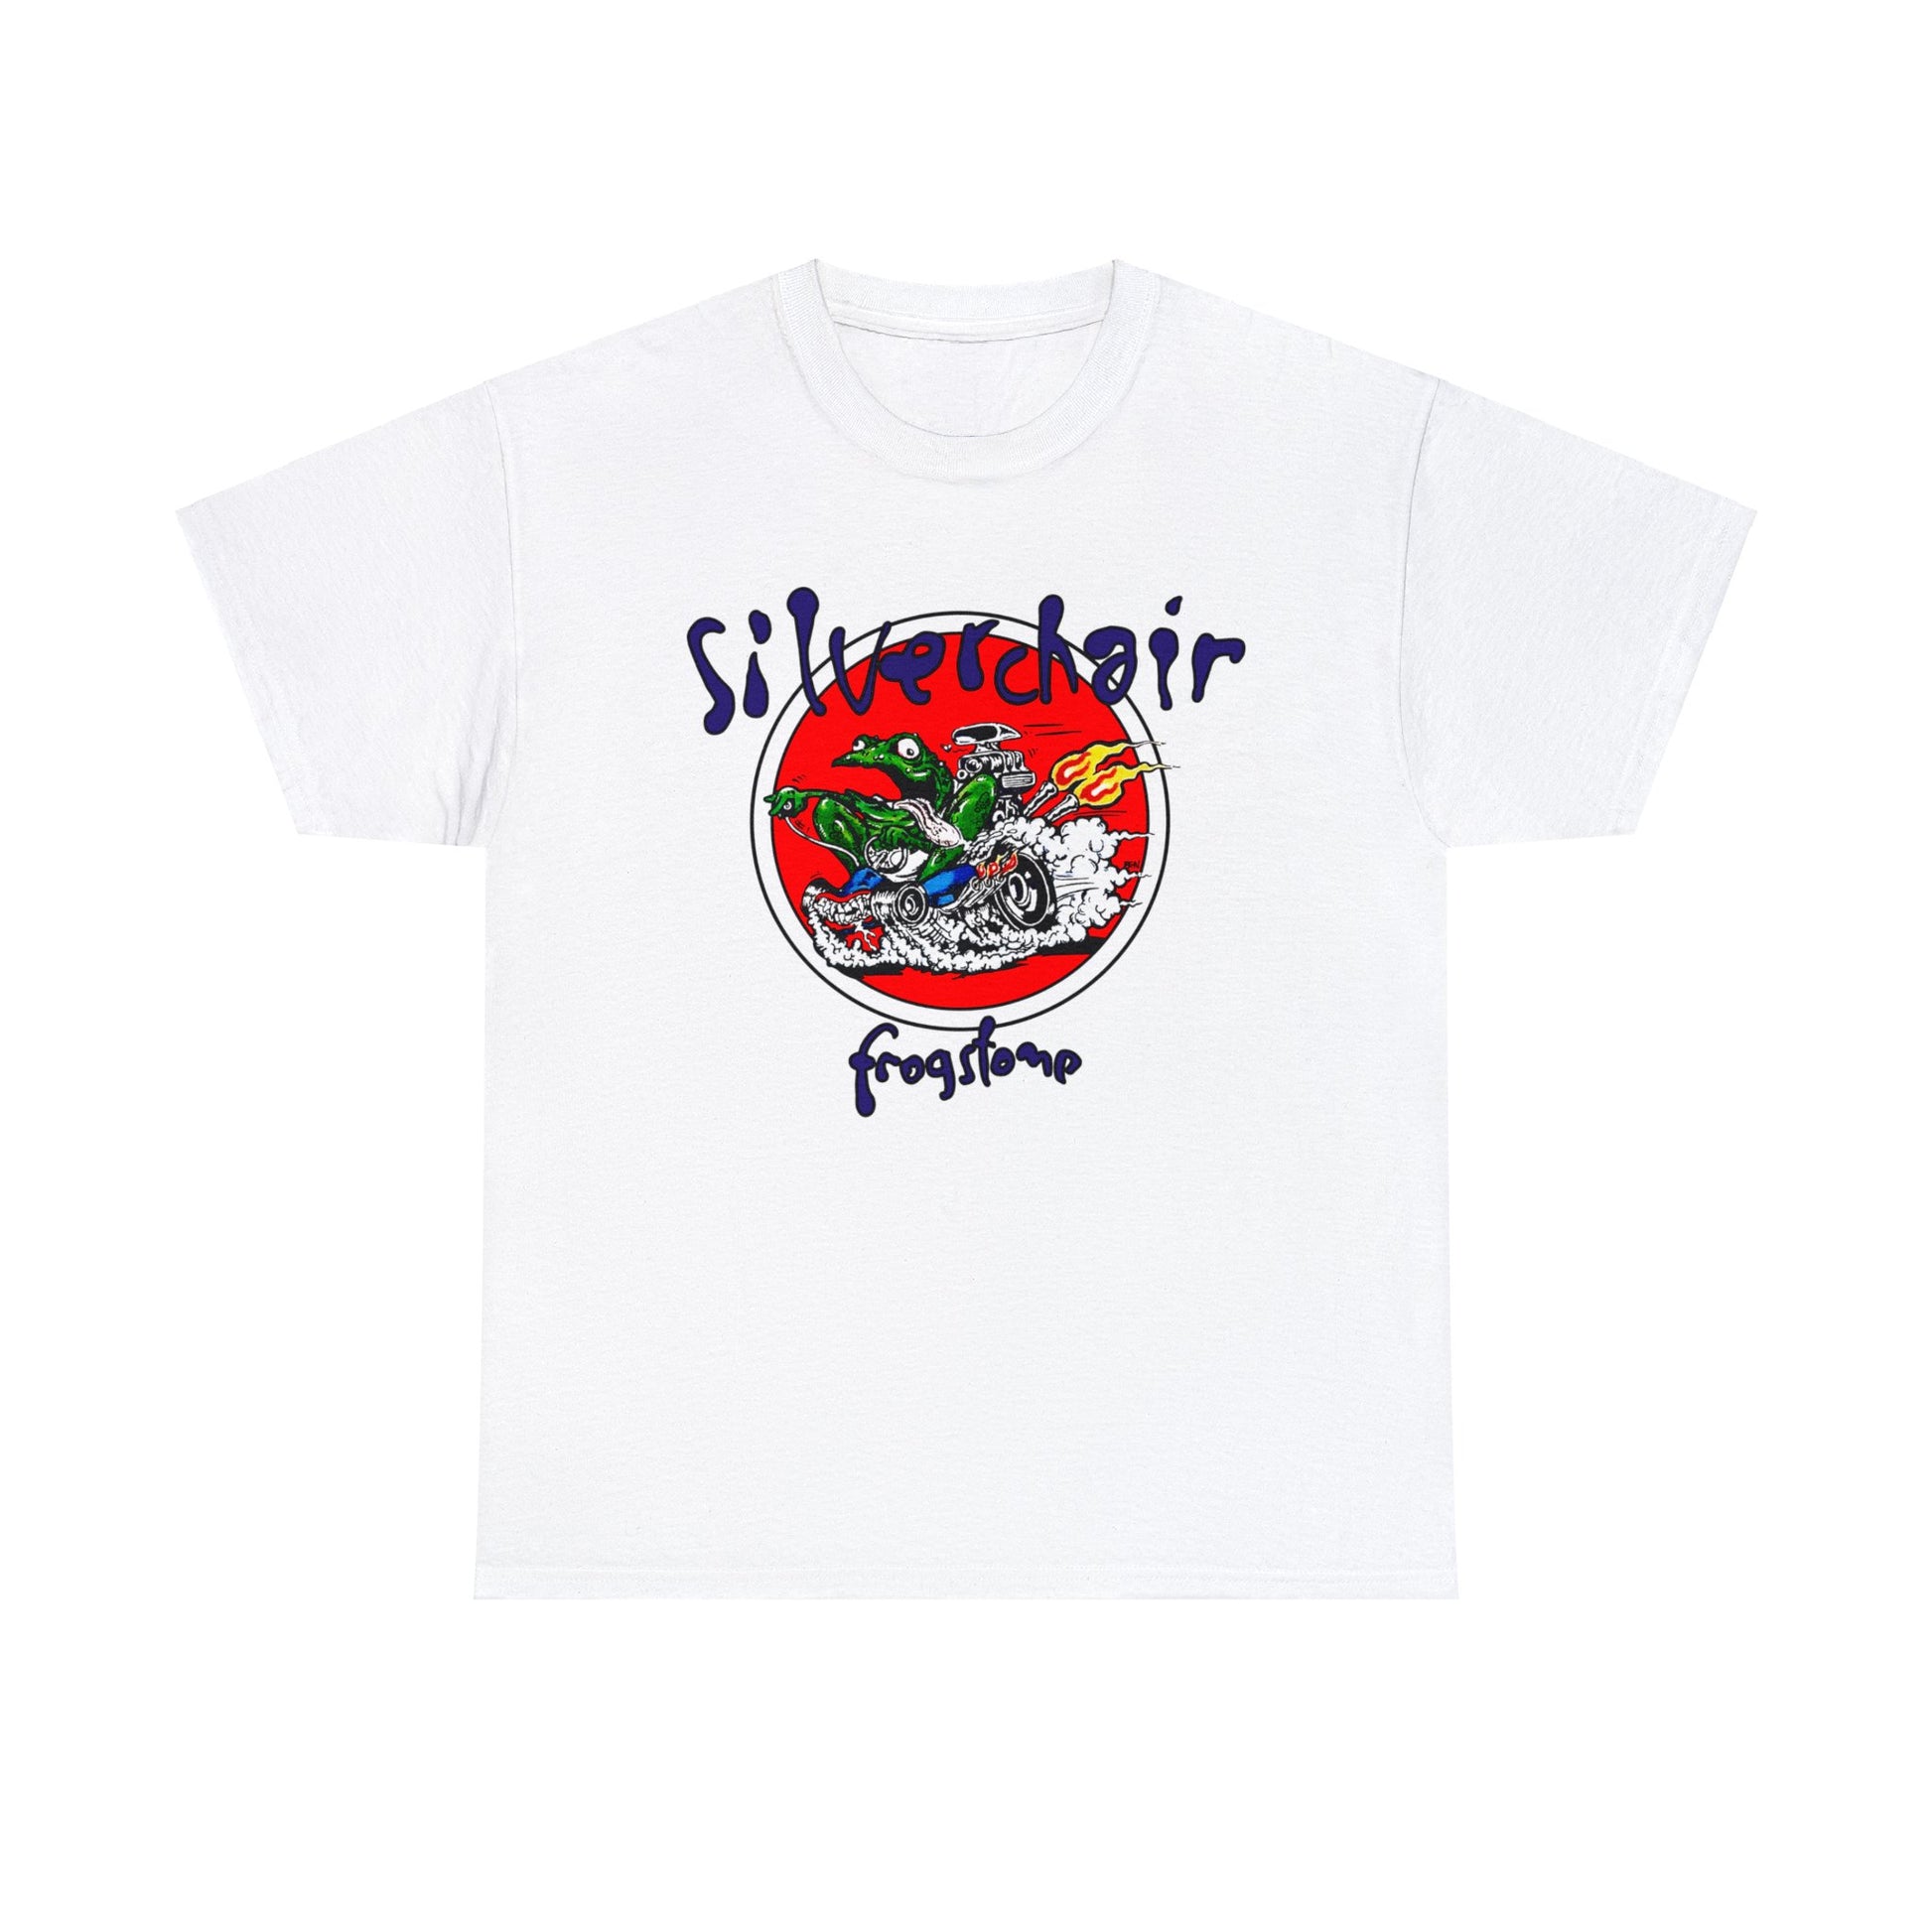 Silverchair Frogstomp Tour 1995 T-shirt for Sale